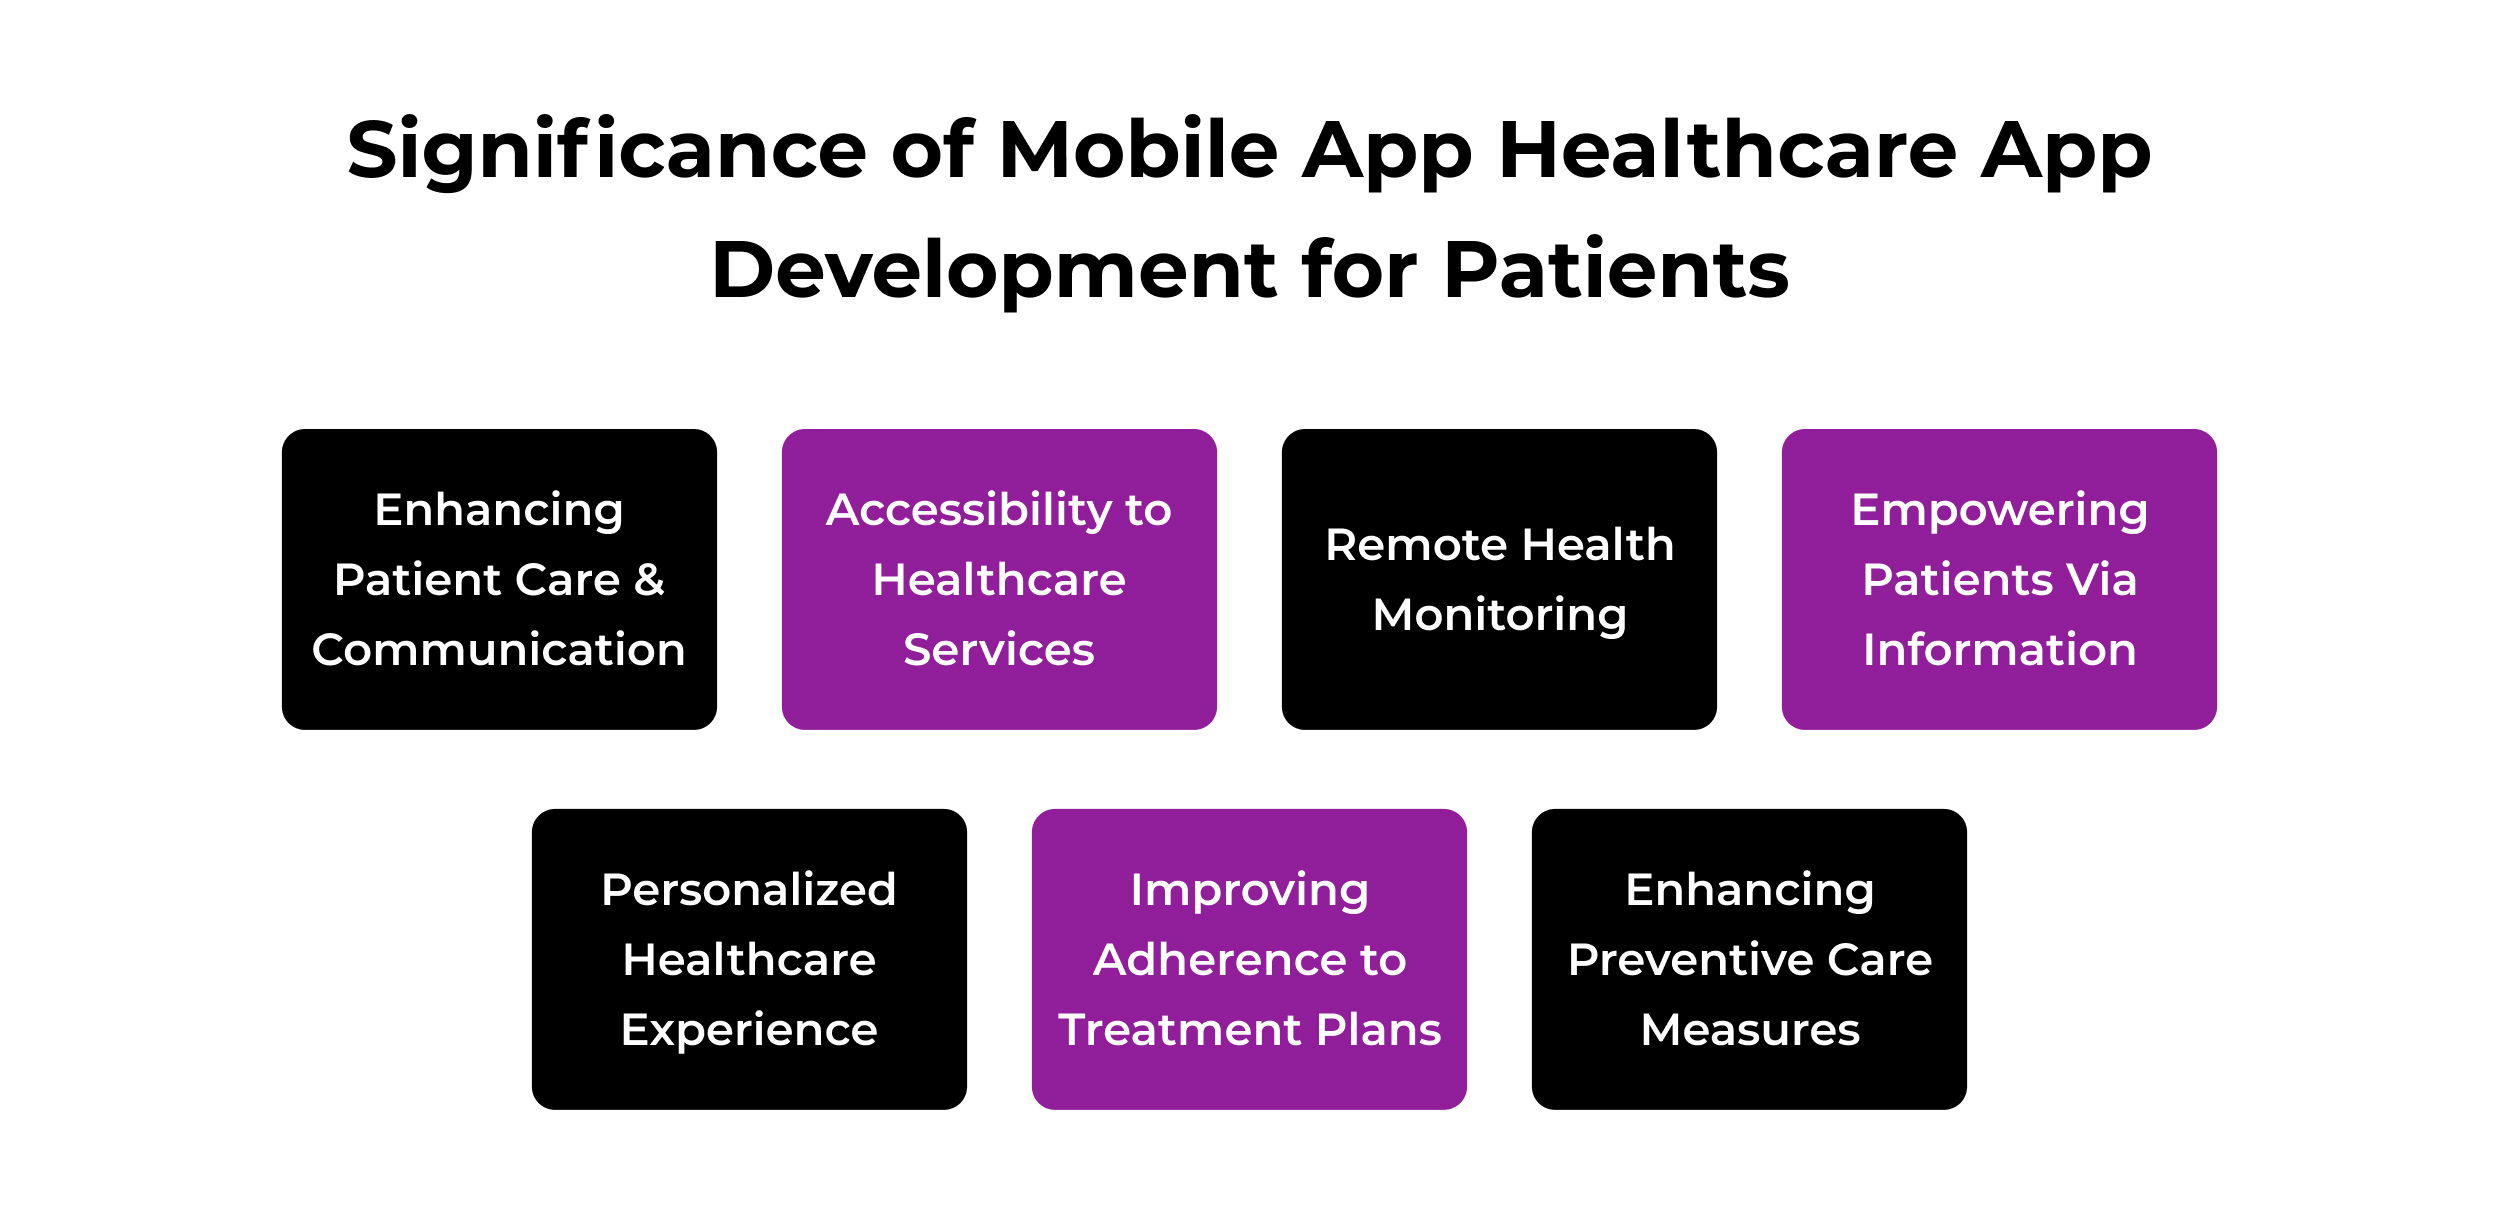 Significance of Mobile App Healthcare App Development for Patients